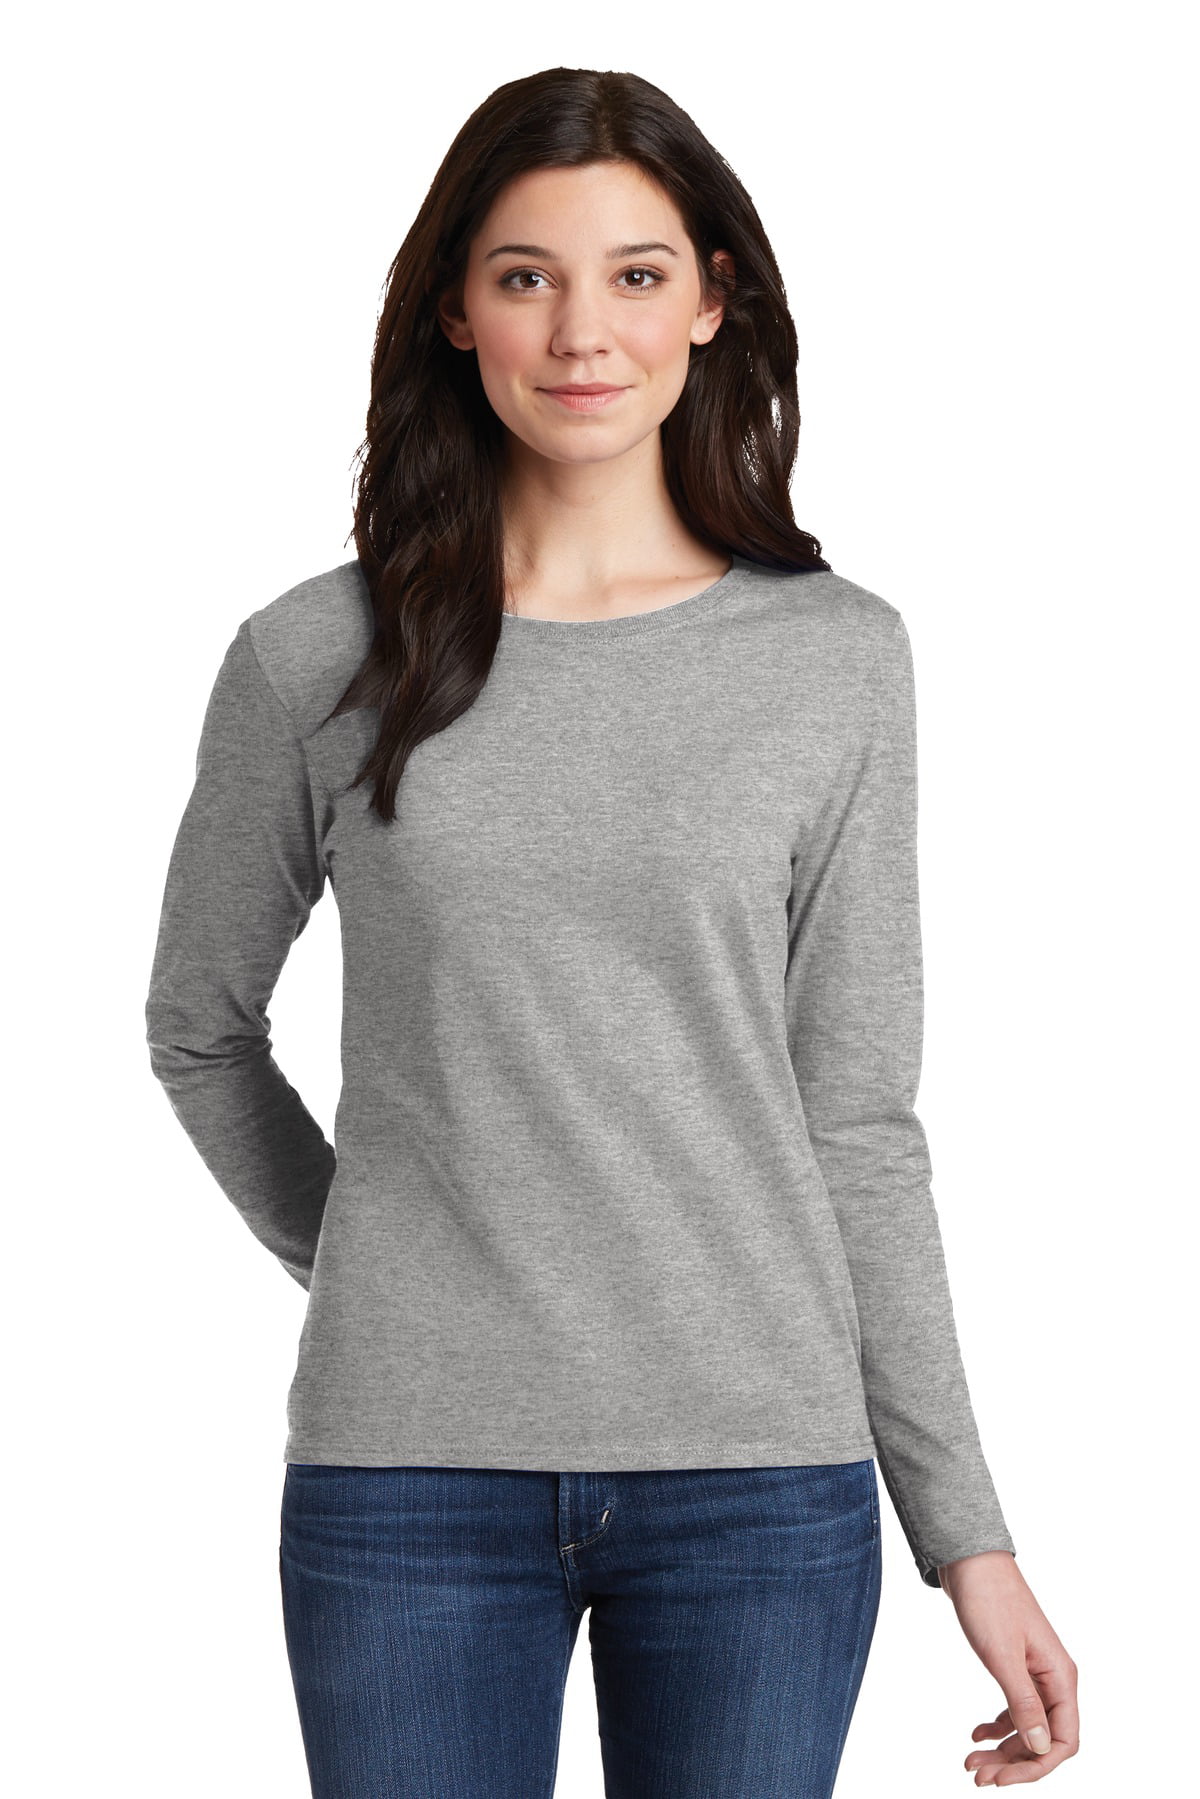 Gildan - Gildan Women's 100 Percent Cotton Long Sleeve T-Shirt - 5400L ...